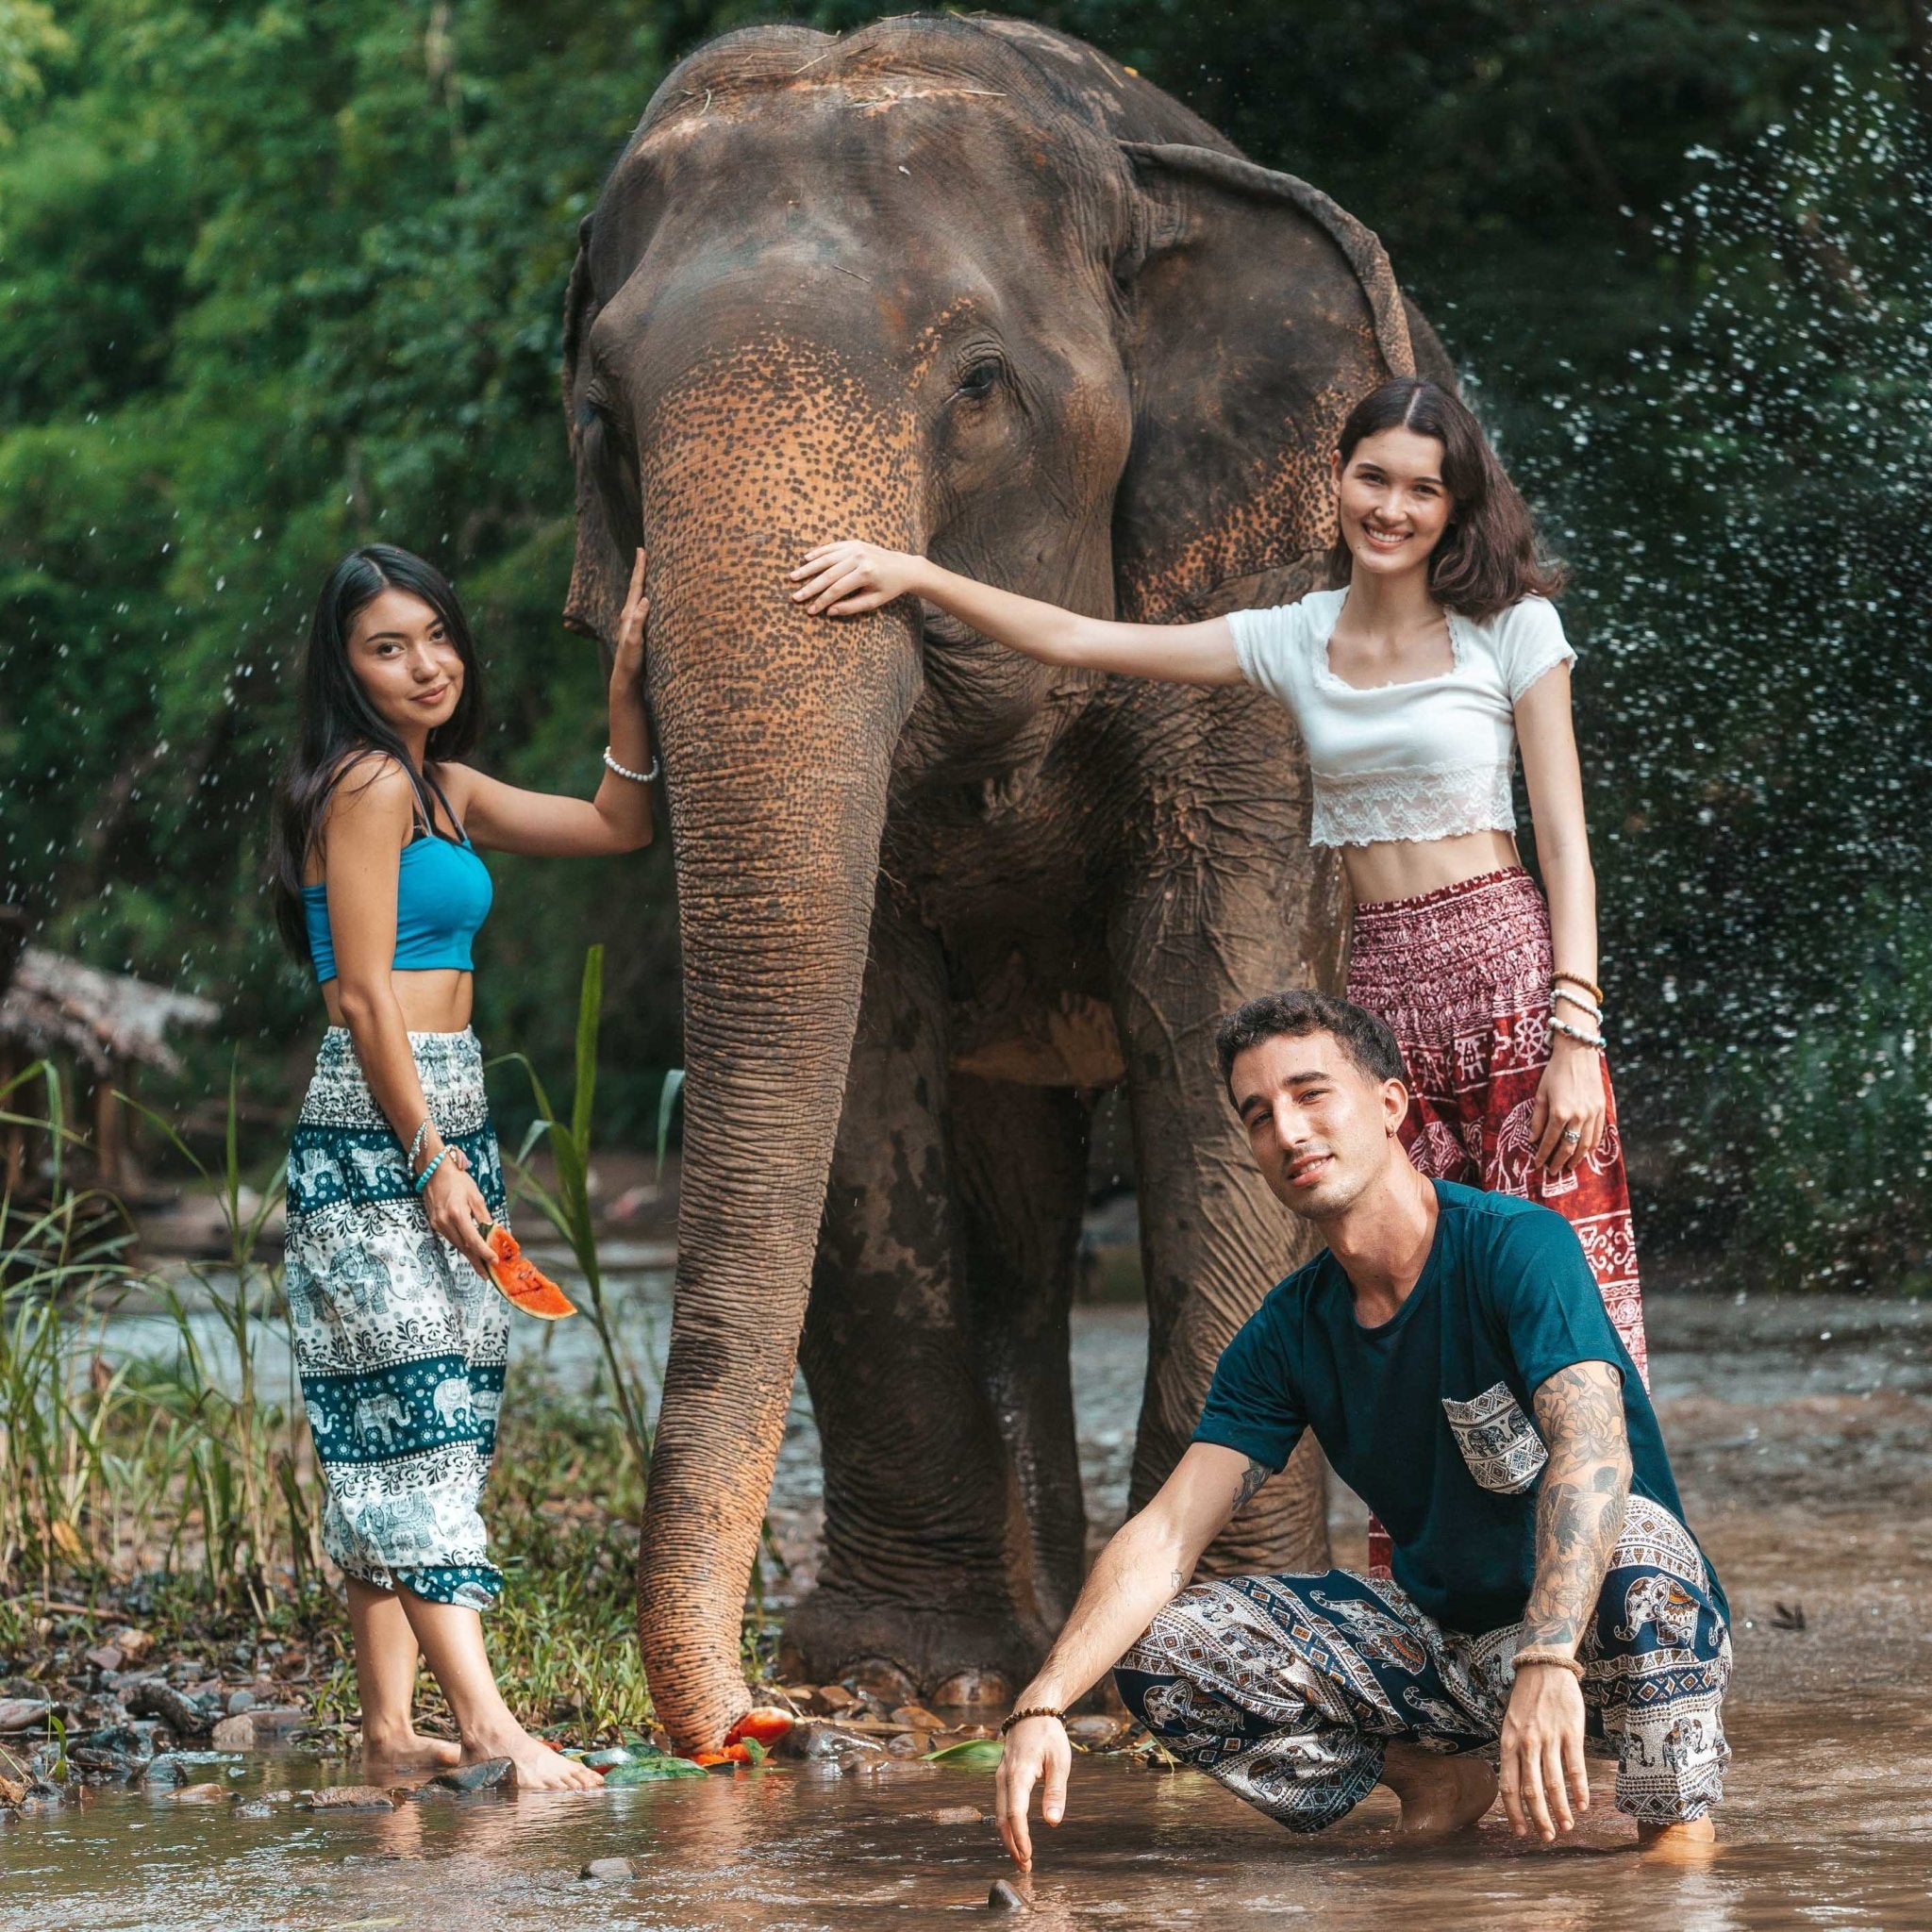 COLOMBO PANTS - Elastic Waist Elepanta Elastic Waist Pants - Buy Today Elephant Pants Jewelry And Bohemian Clothes Handmade In Thailand Help To Save The Elephants FairTrade And Vegan